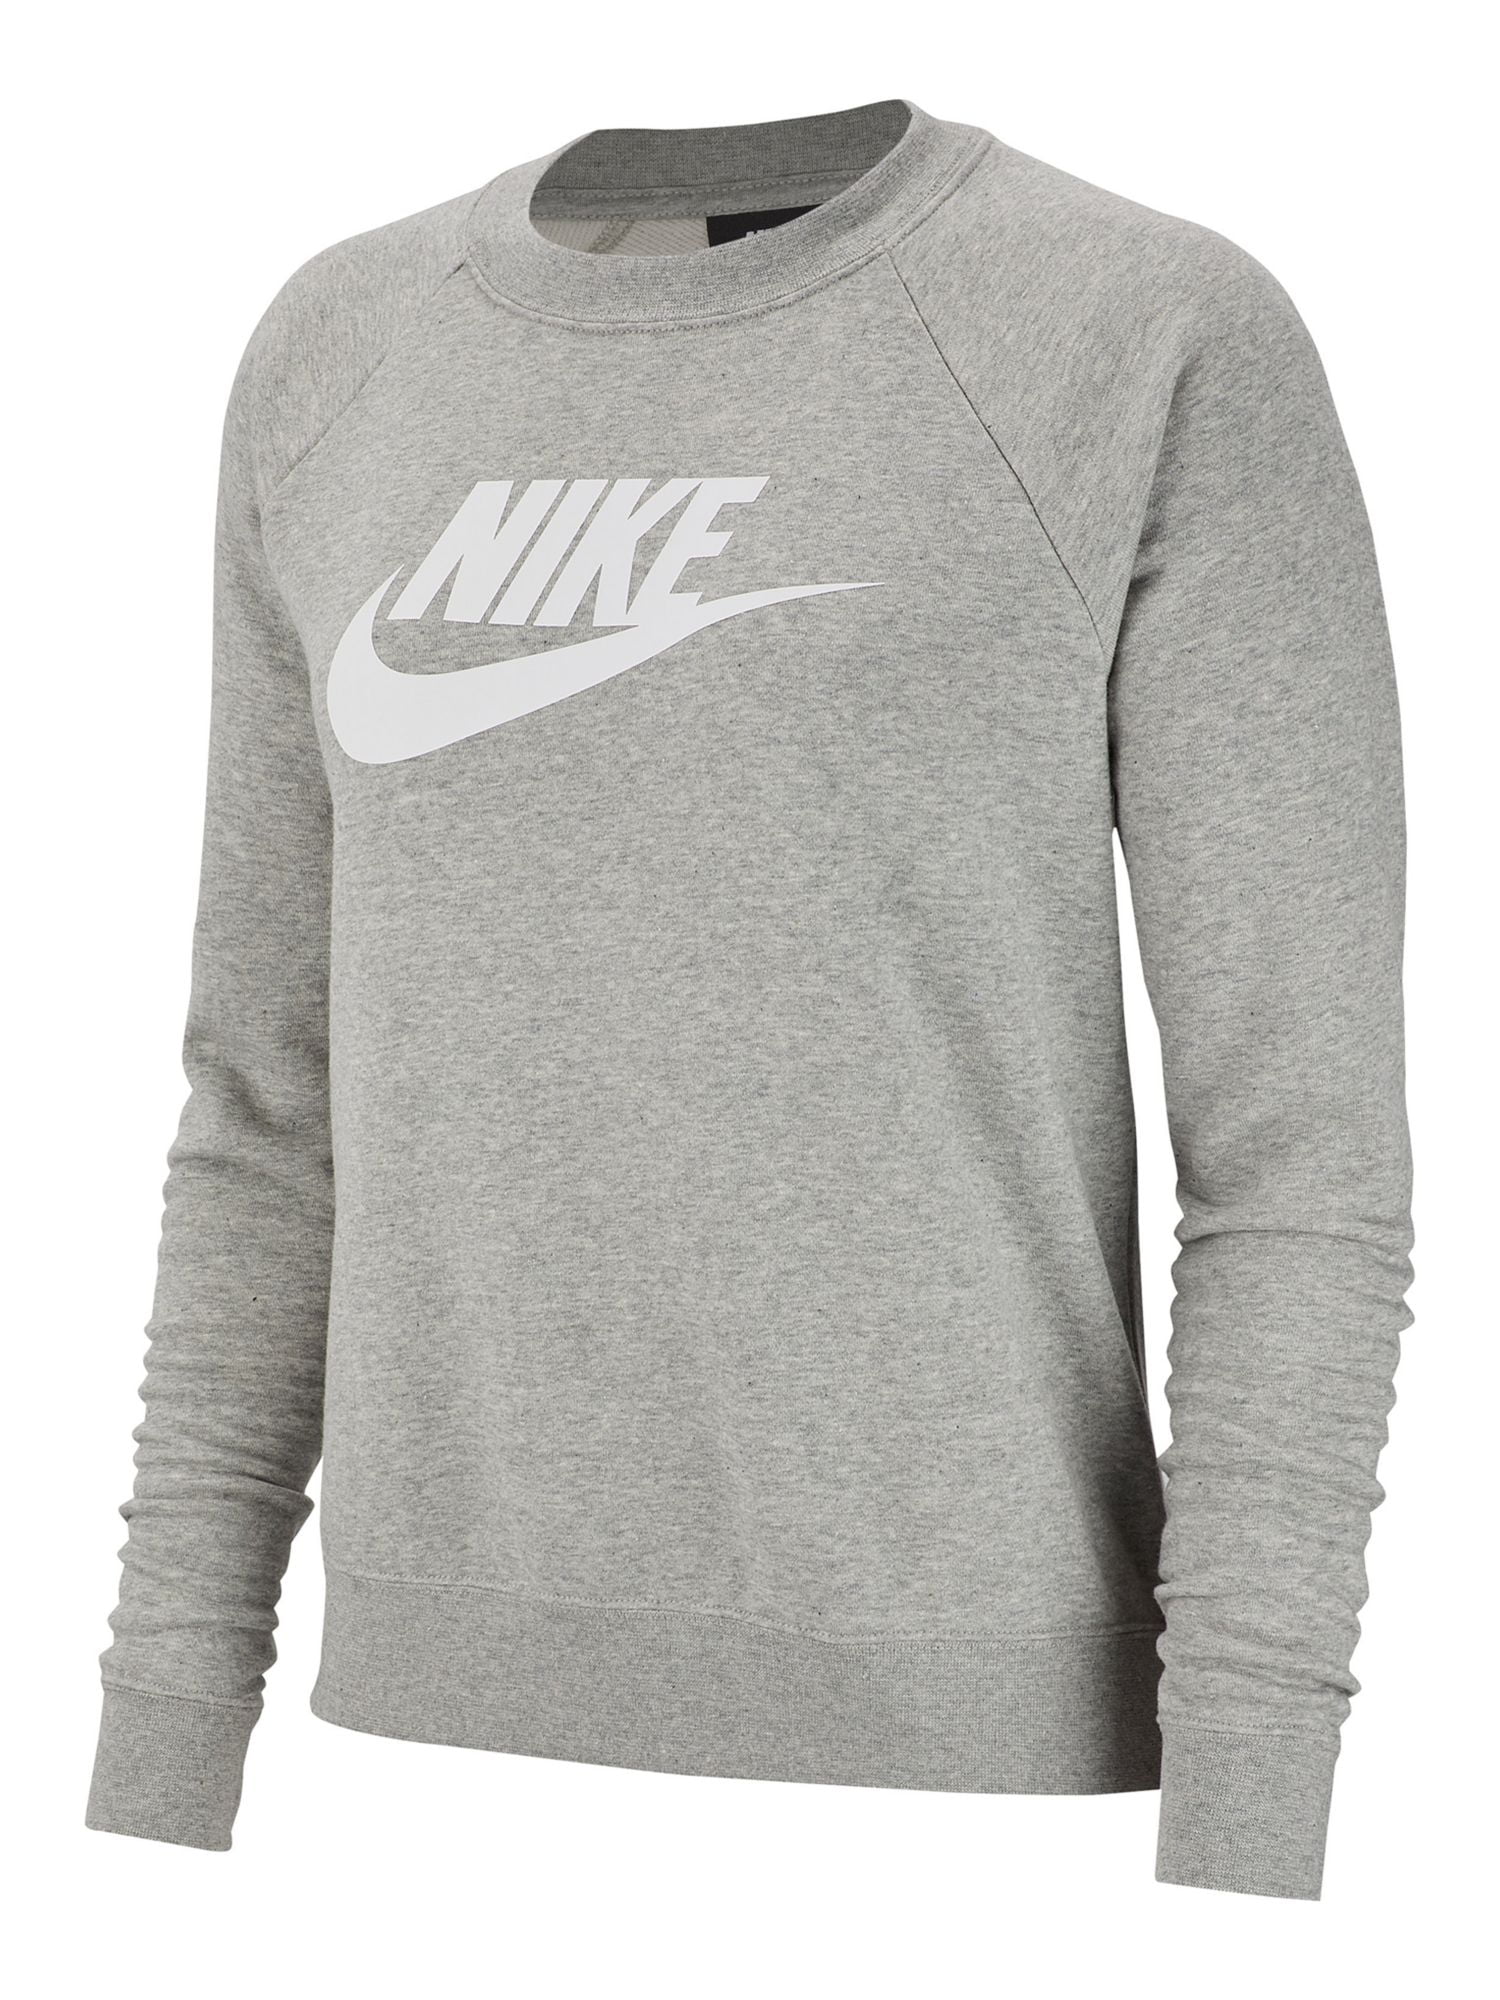 NIKE Womens Gray Fleece Logo Graphic Active Wear Sweatshirt Plus 1X ...